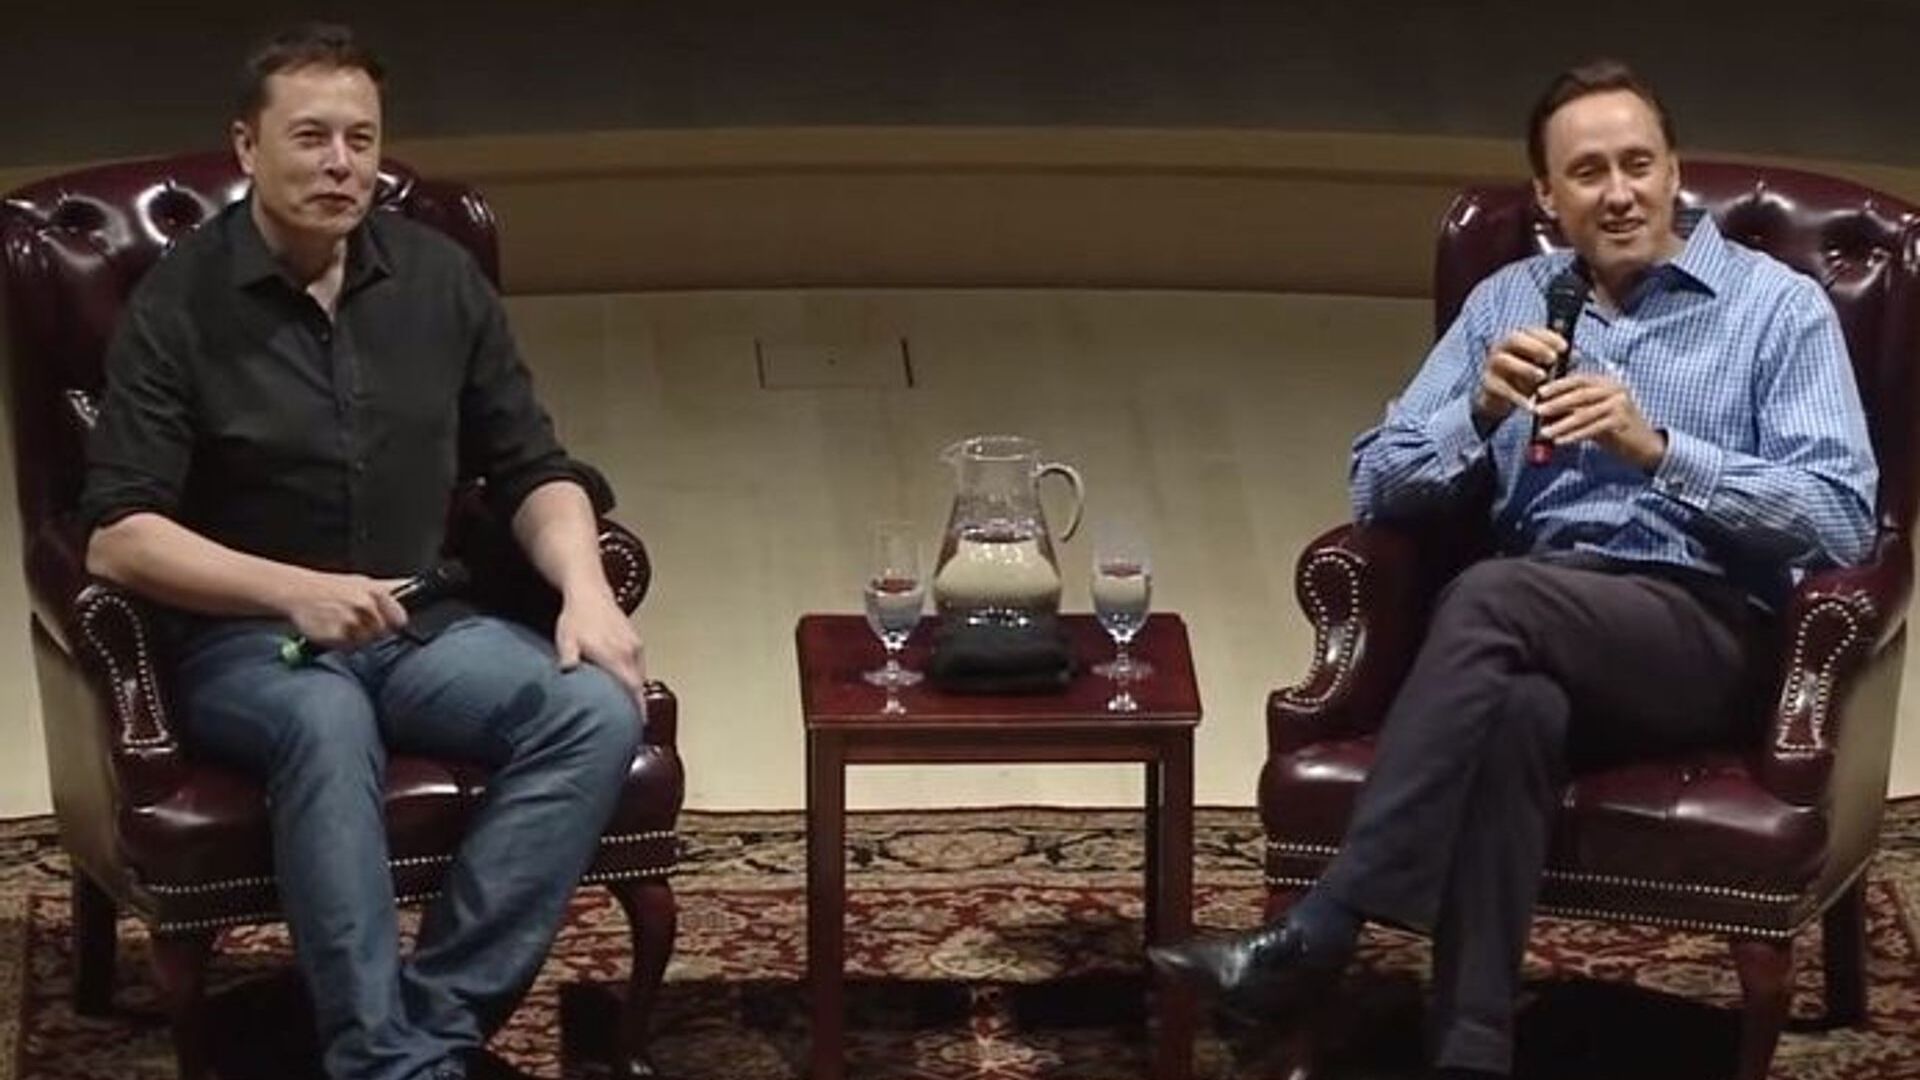 Gespräch zwischen dem visionären Unternehmer Elon Musk und dem berühmten Investor Steve Jurvetson